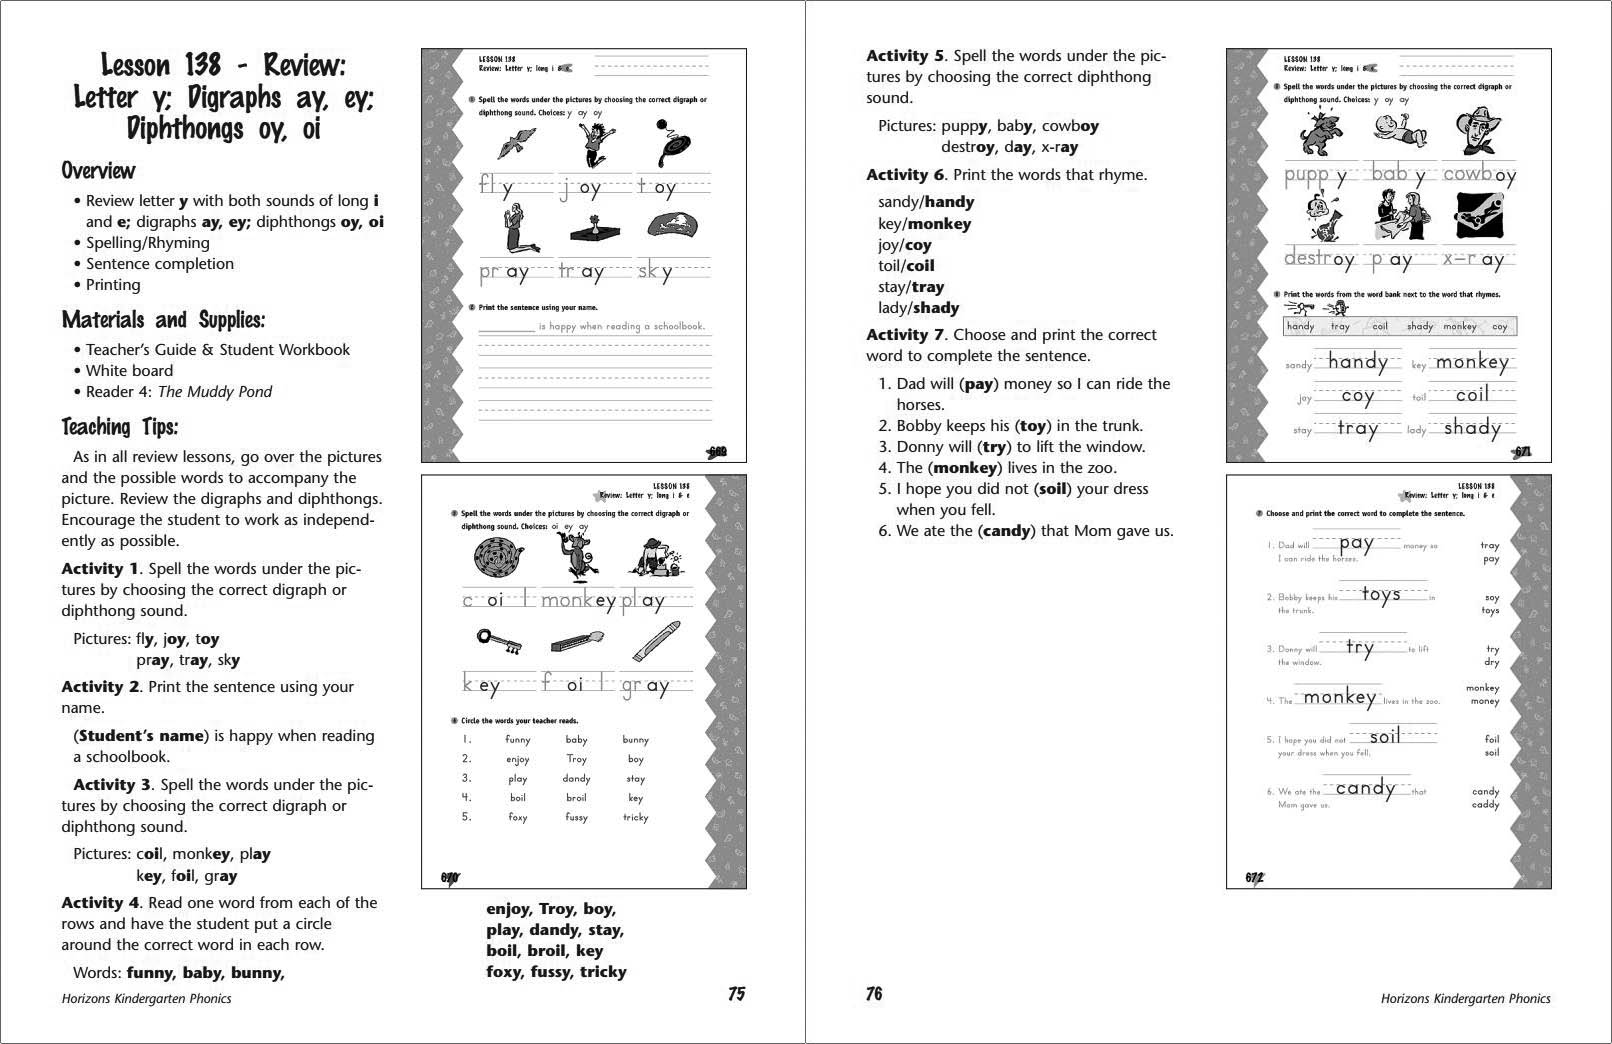 K_Phonics Reading Teacher's Guide sample page 3-4